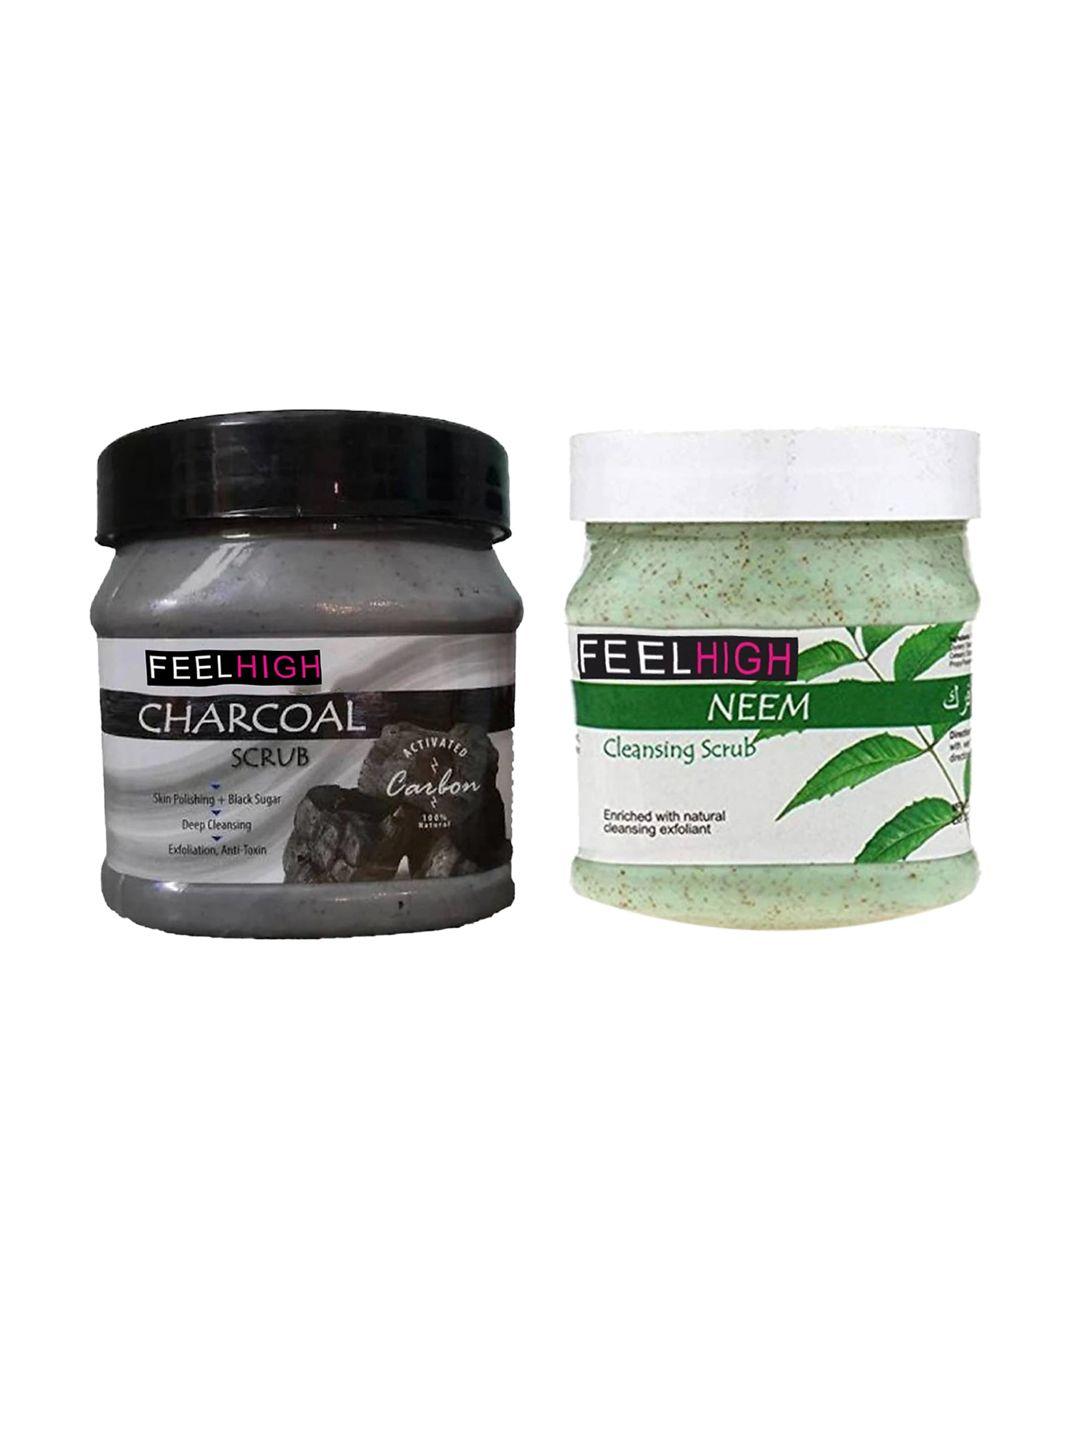 feelhigh set of 2 neem face cleansing scrub & charcoal face & body scrub-500 ml each